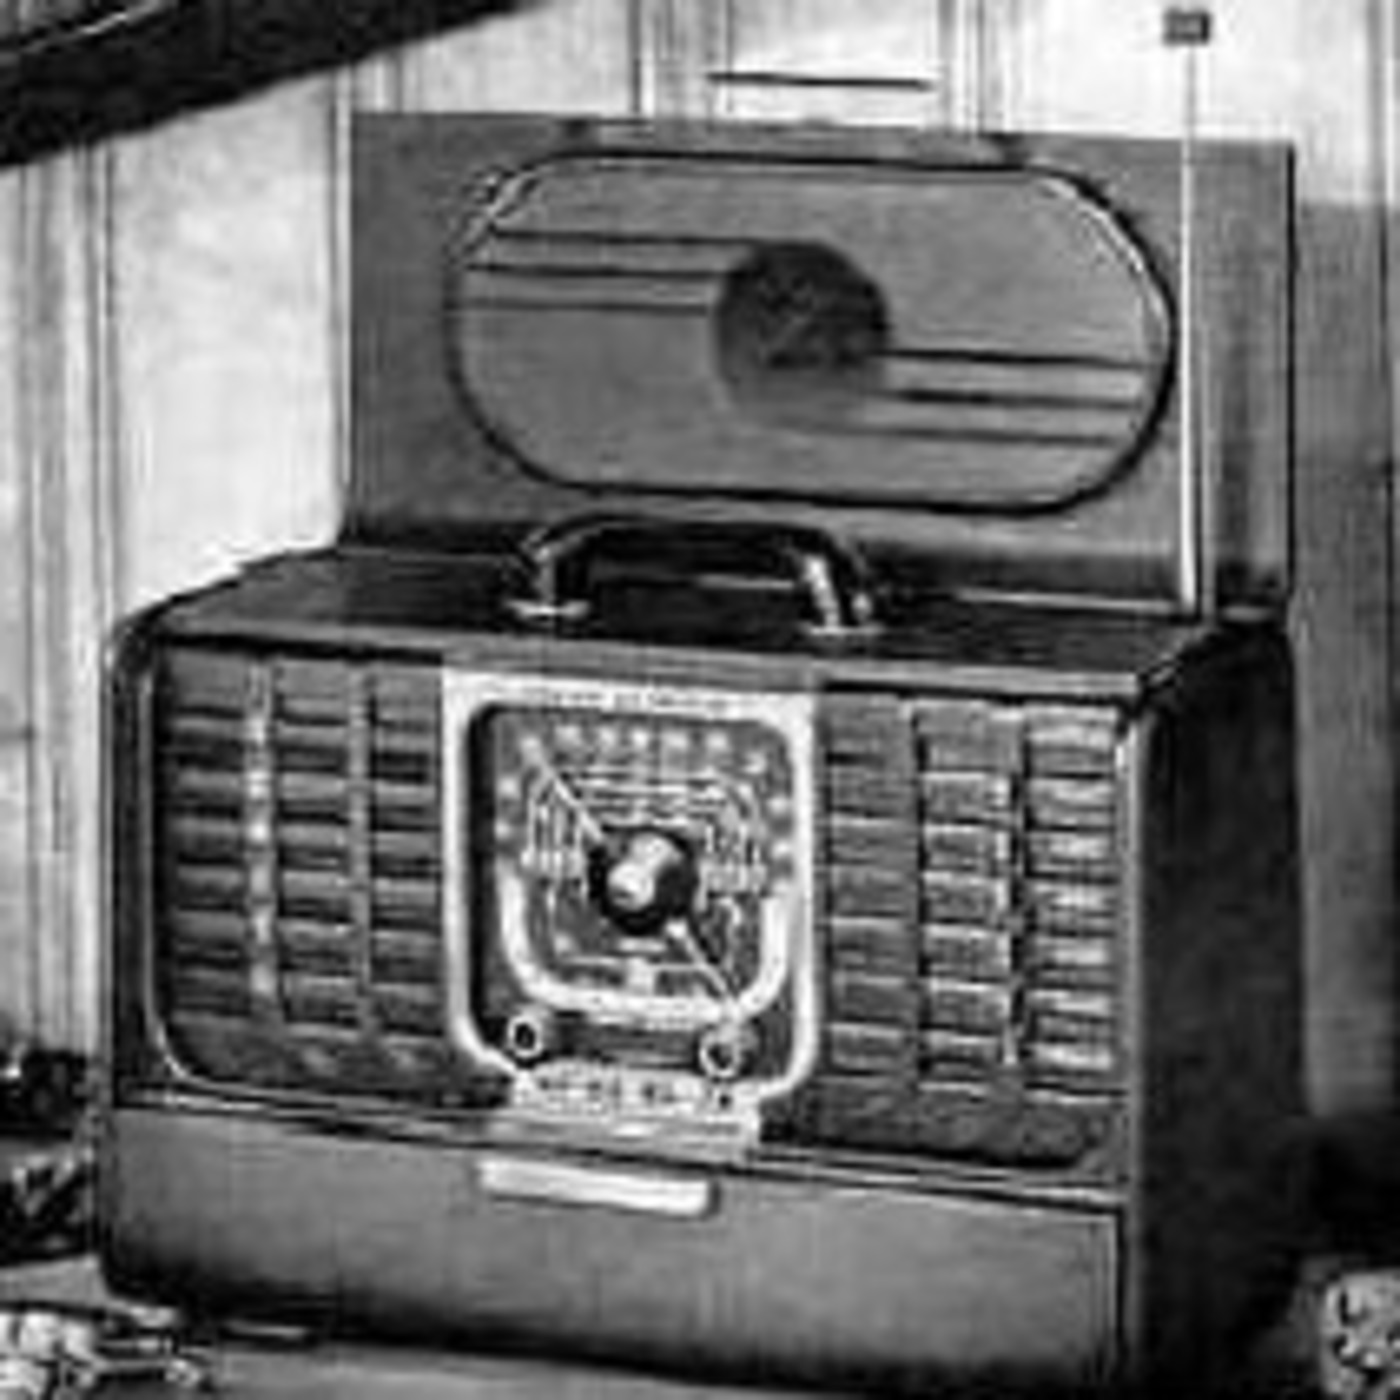 Celebrating 50 years of radio